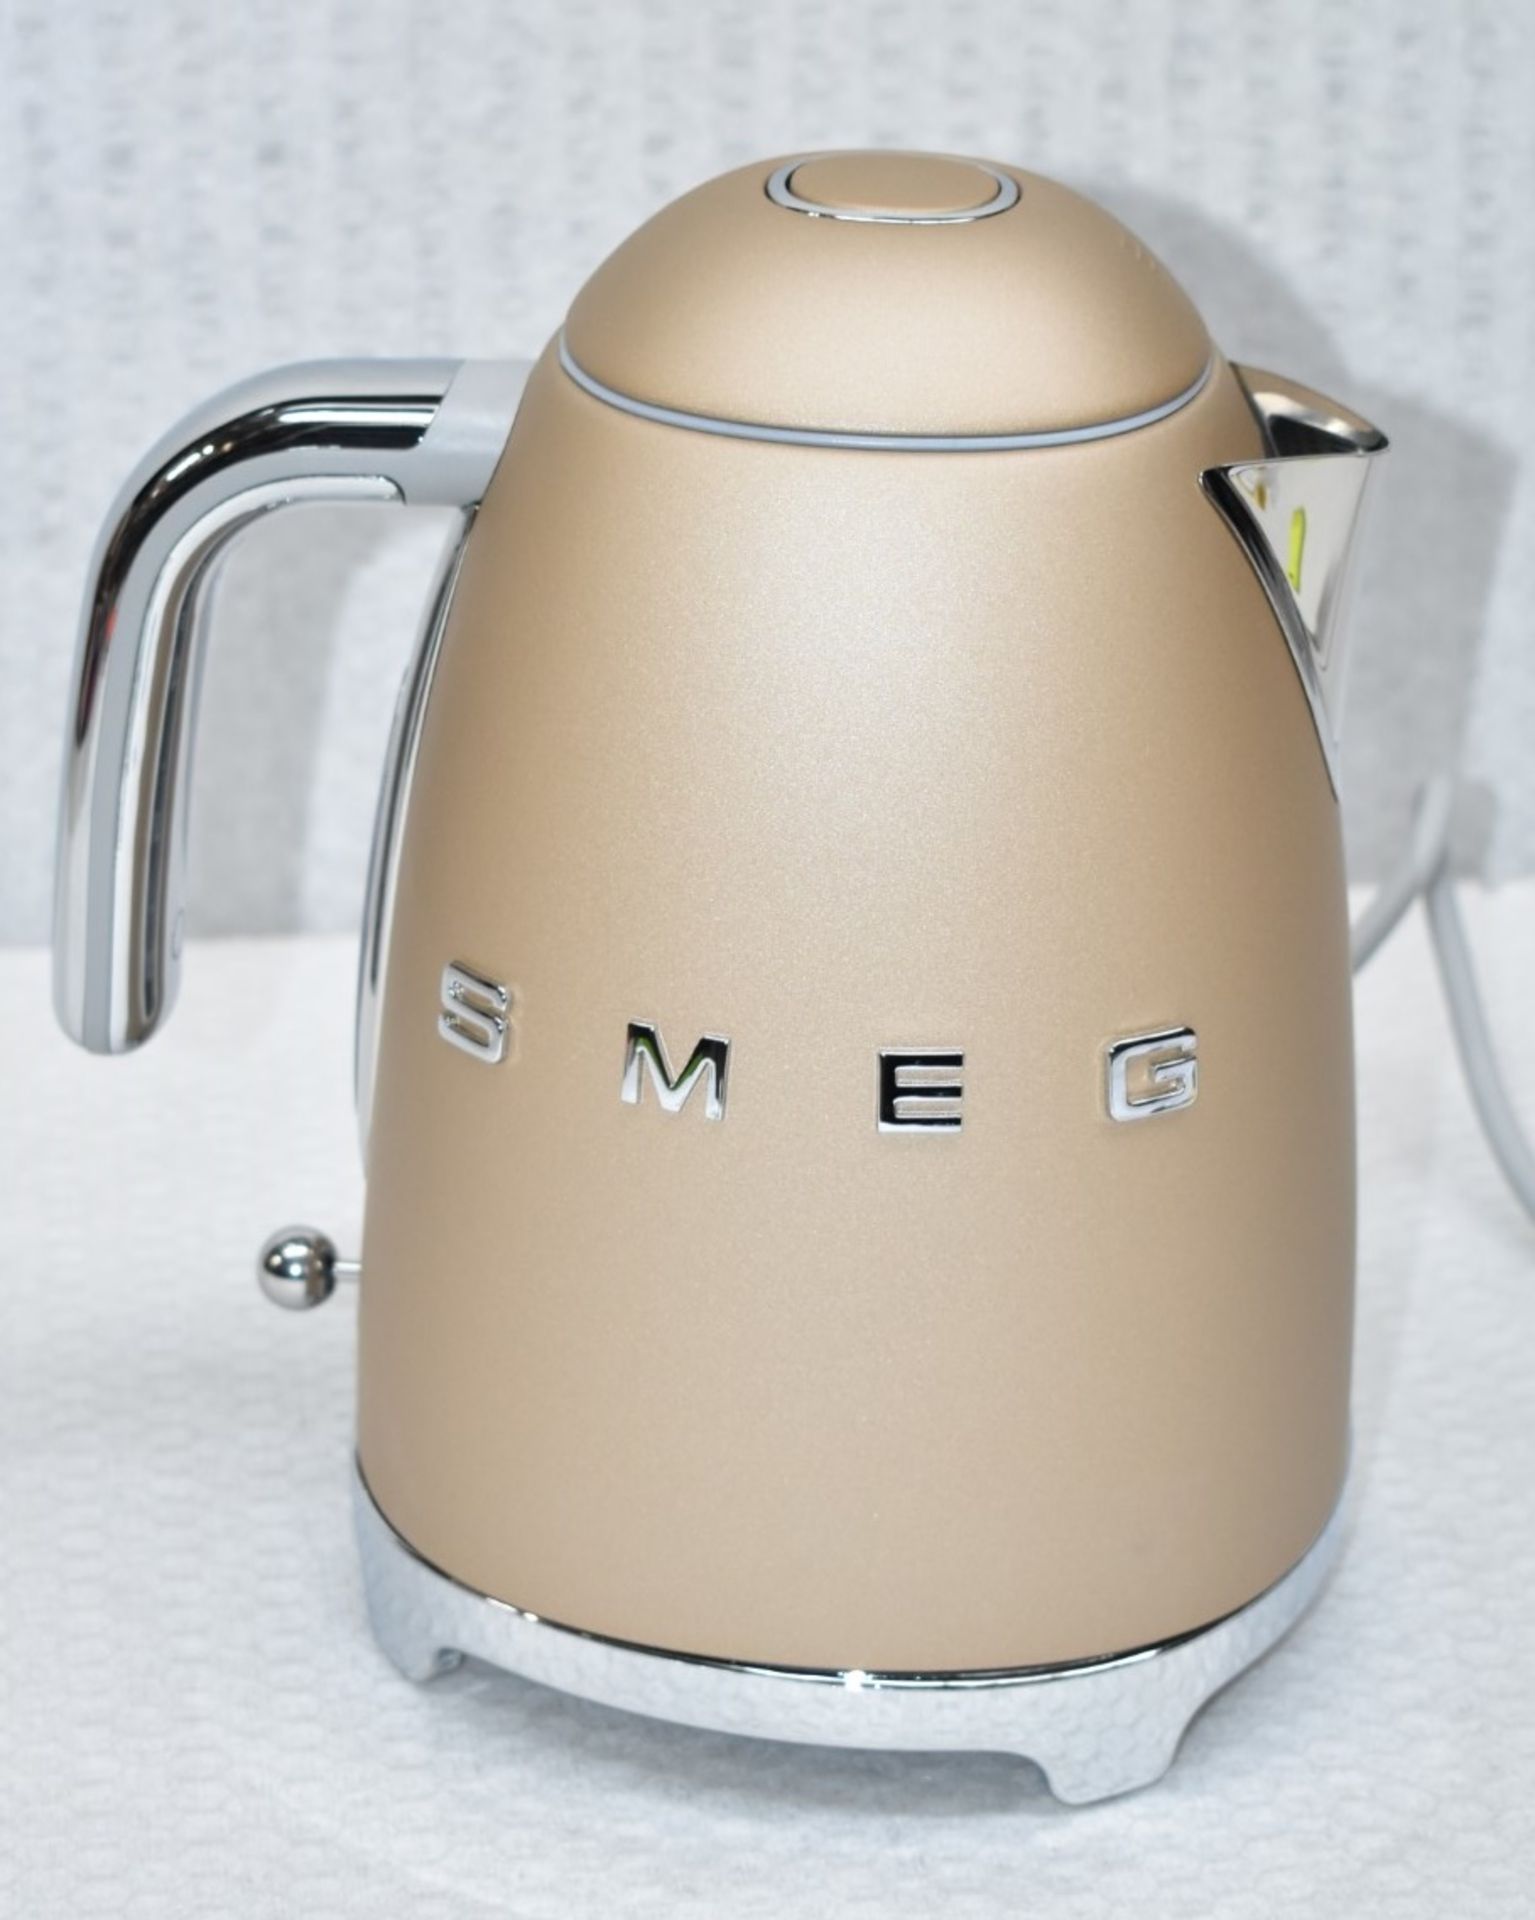 1 x SMEG Retro 50s-Style Electric Kettle In A Matte Champagne Finish - Original Price £189.00 - Image 11 of 12